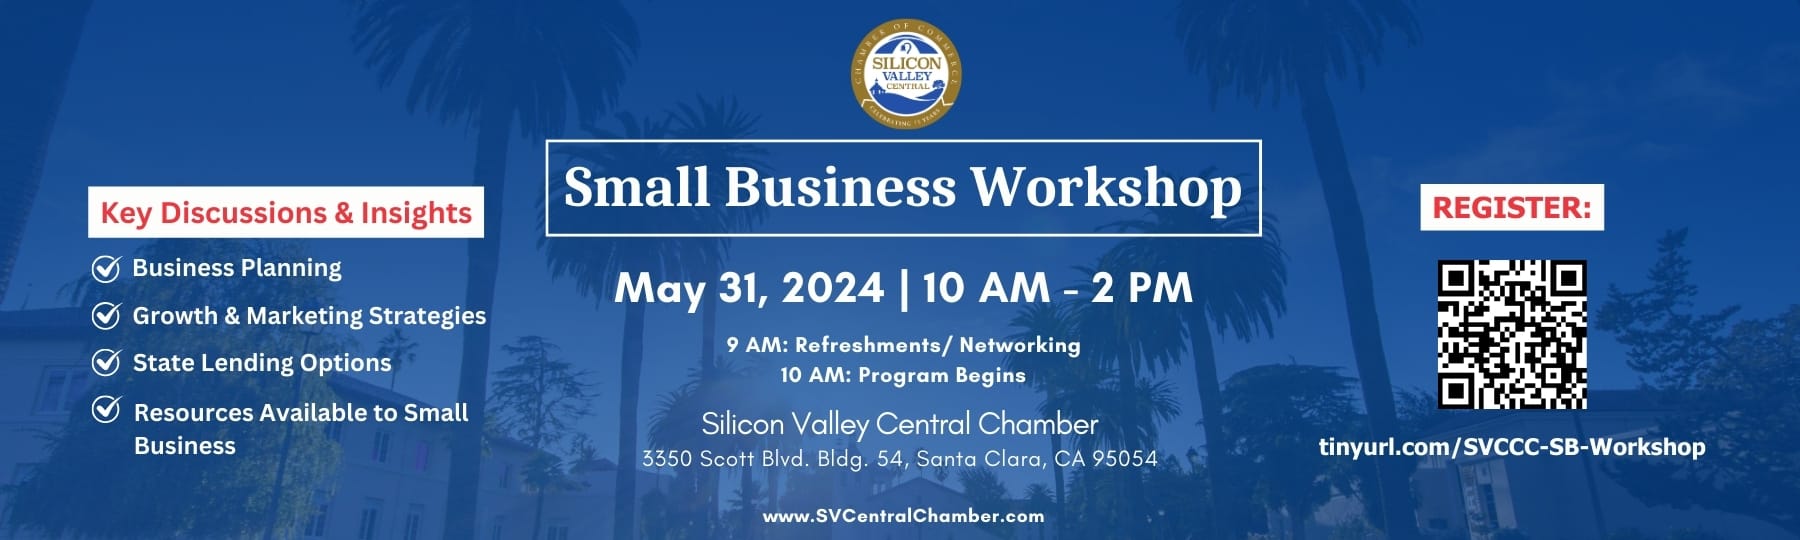 Samll Business Workshop_May 31